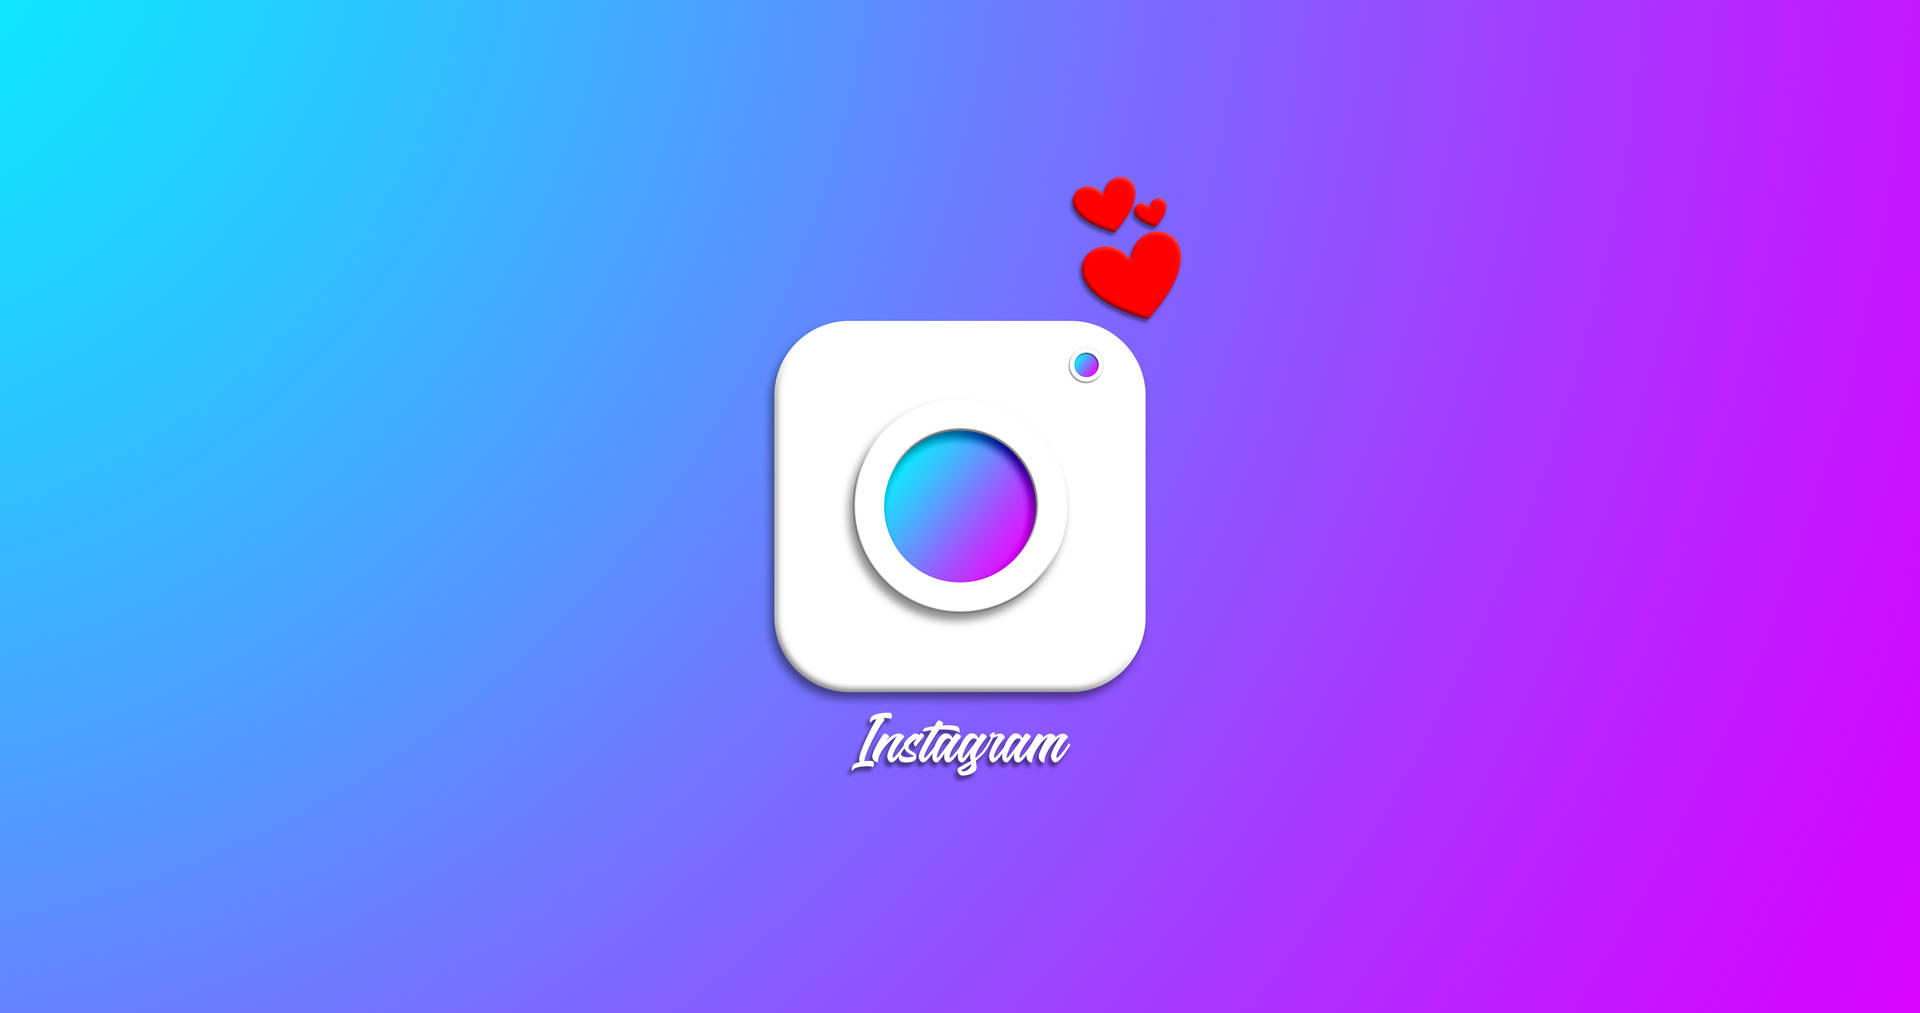 Cute Instagram Logo With Heart